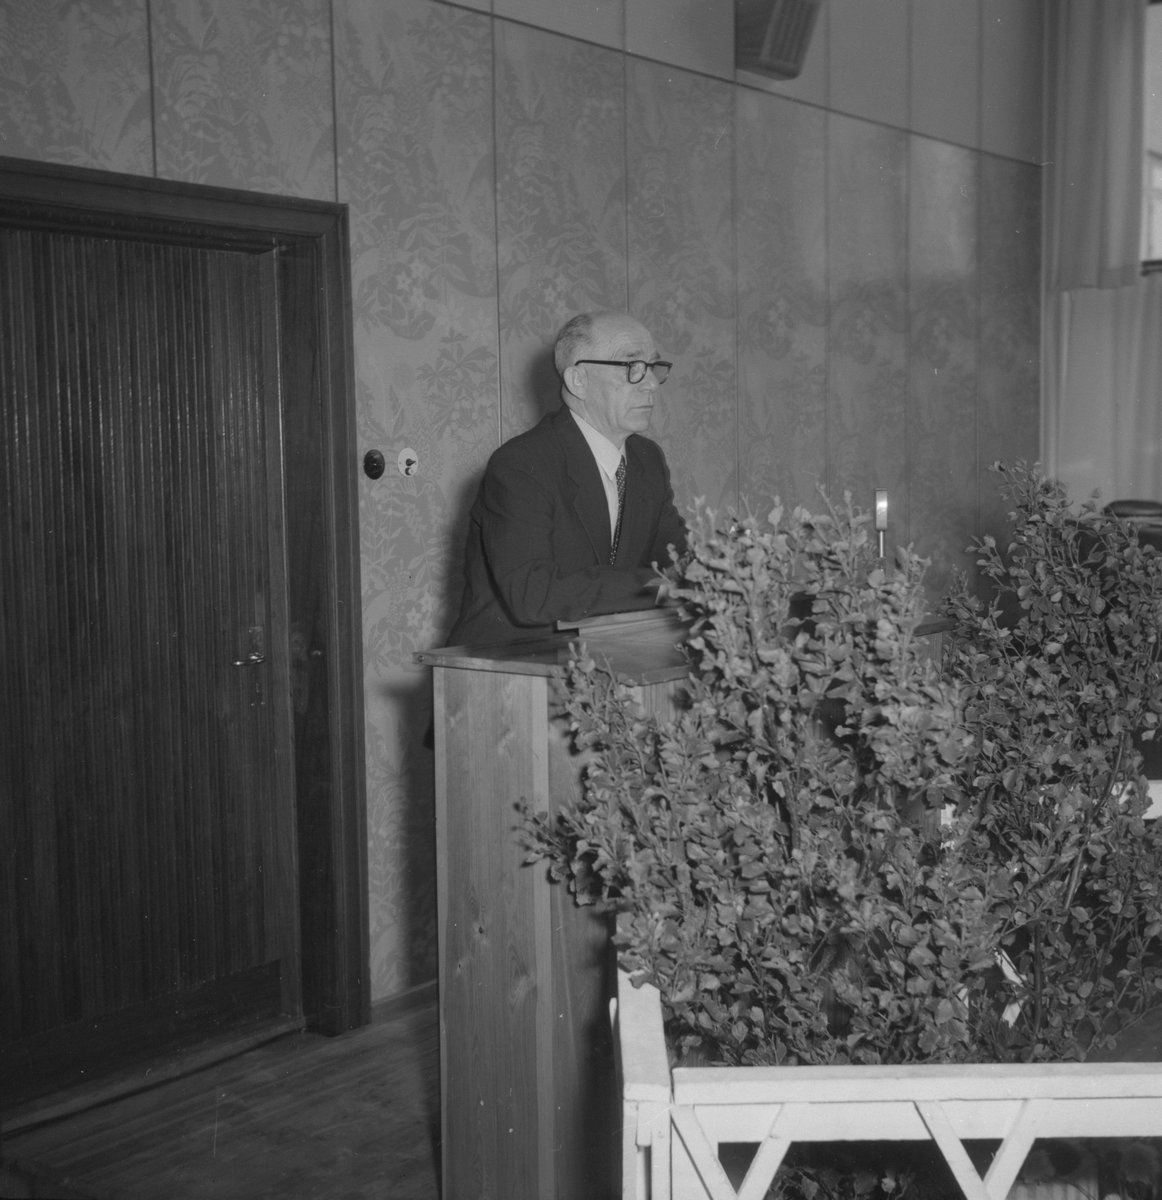 Innvielse av Narvik tekniske skole  12.9.1955. På talerstolen Hans Formo, driftsing Everket f. 1896?
Styreleder Narvik tekniske skole